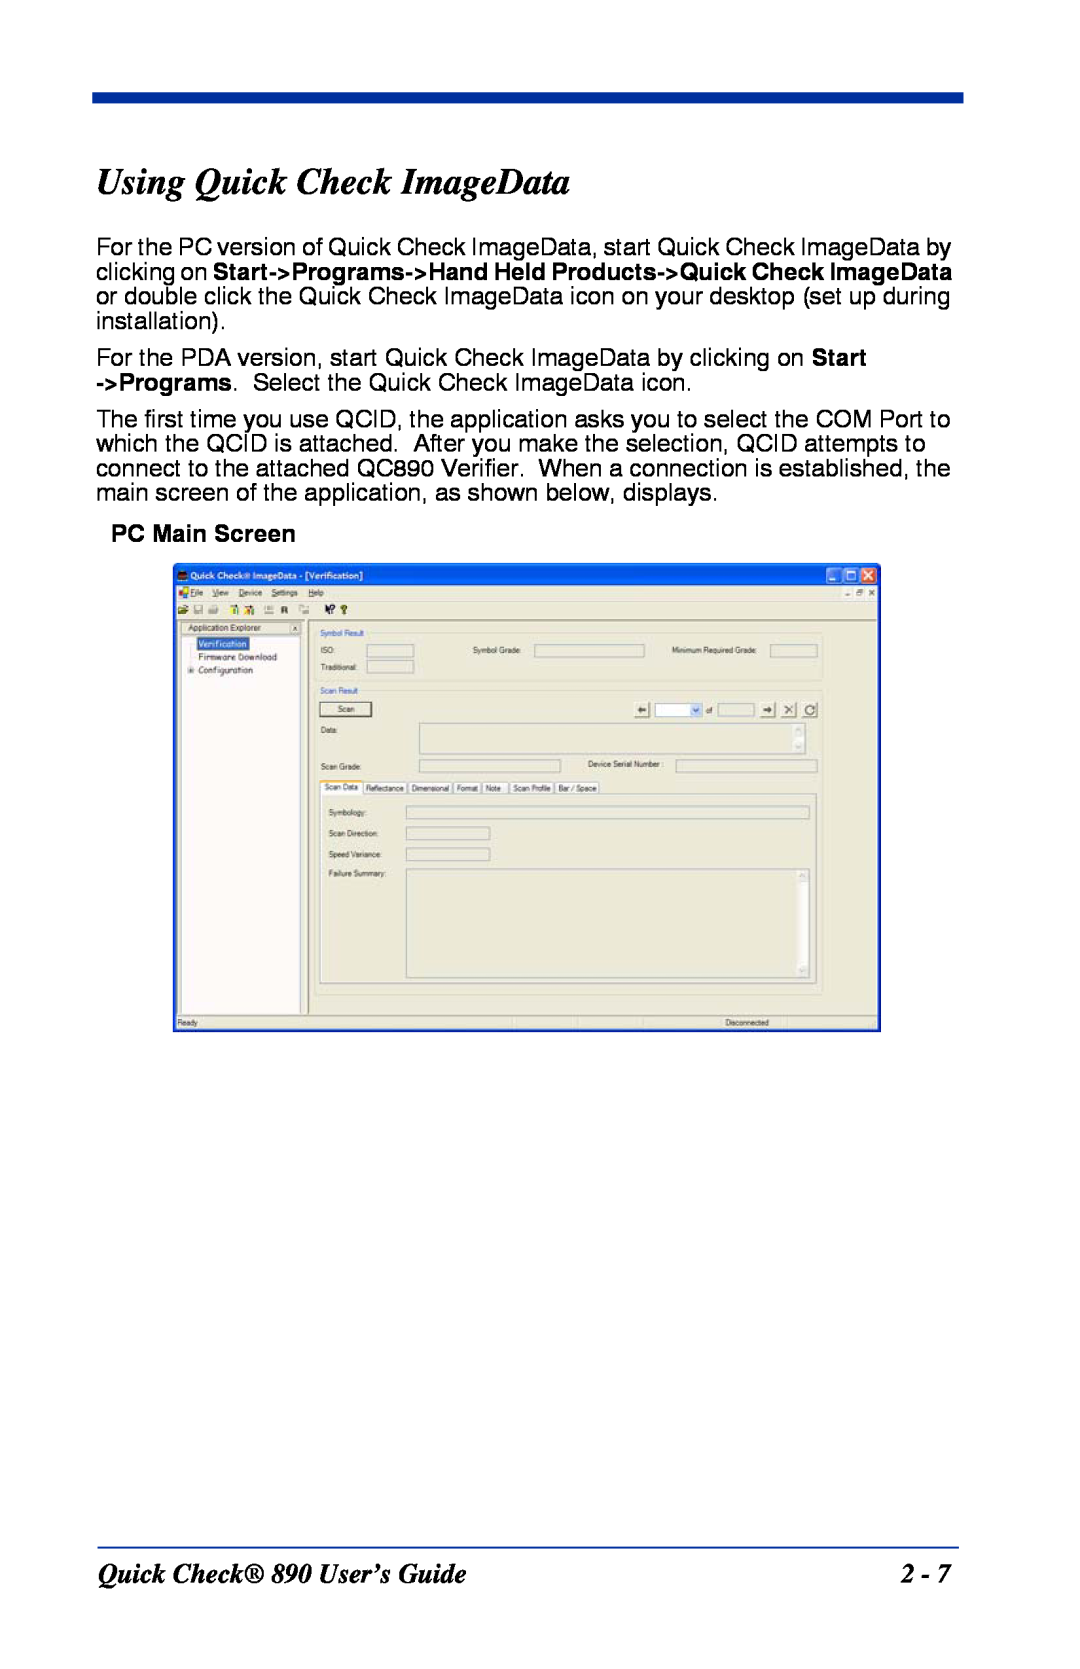 HandHeld Entertainment manual Using Quick Check ImageData, Quick Check 890 User’s Guide, PC Main Screen 